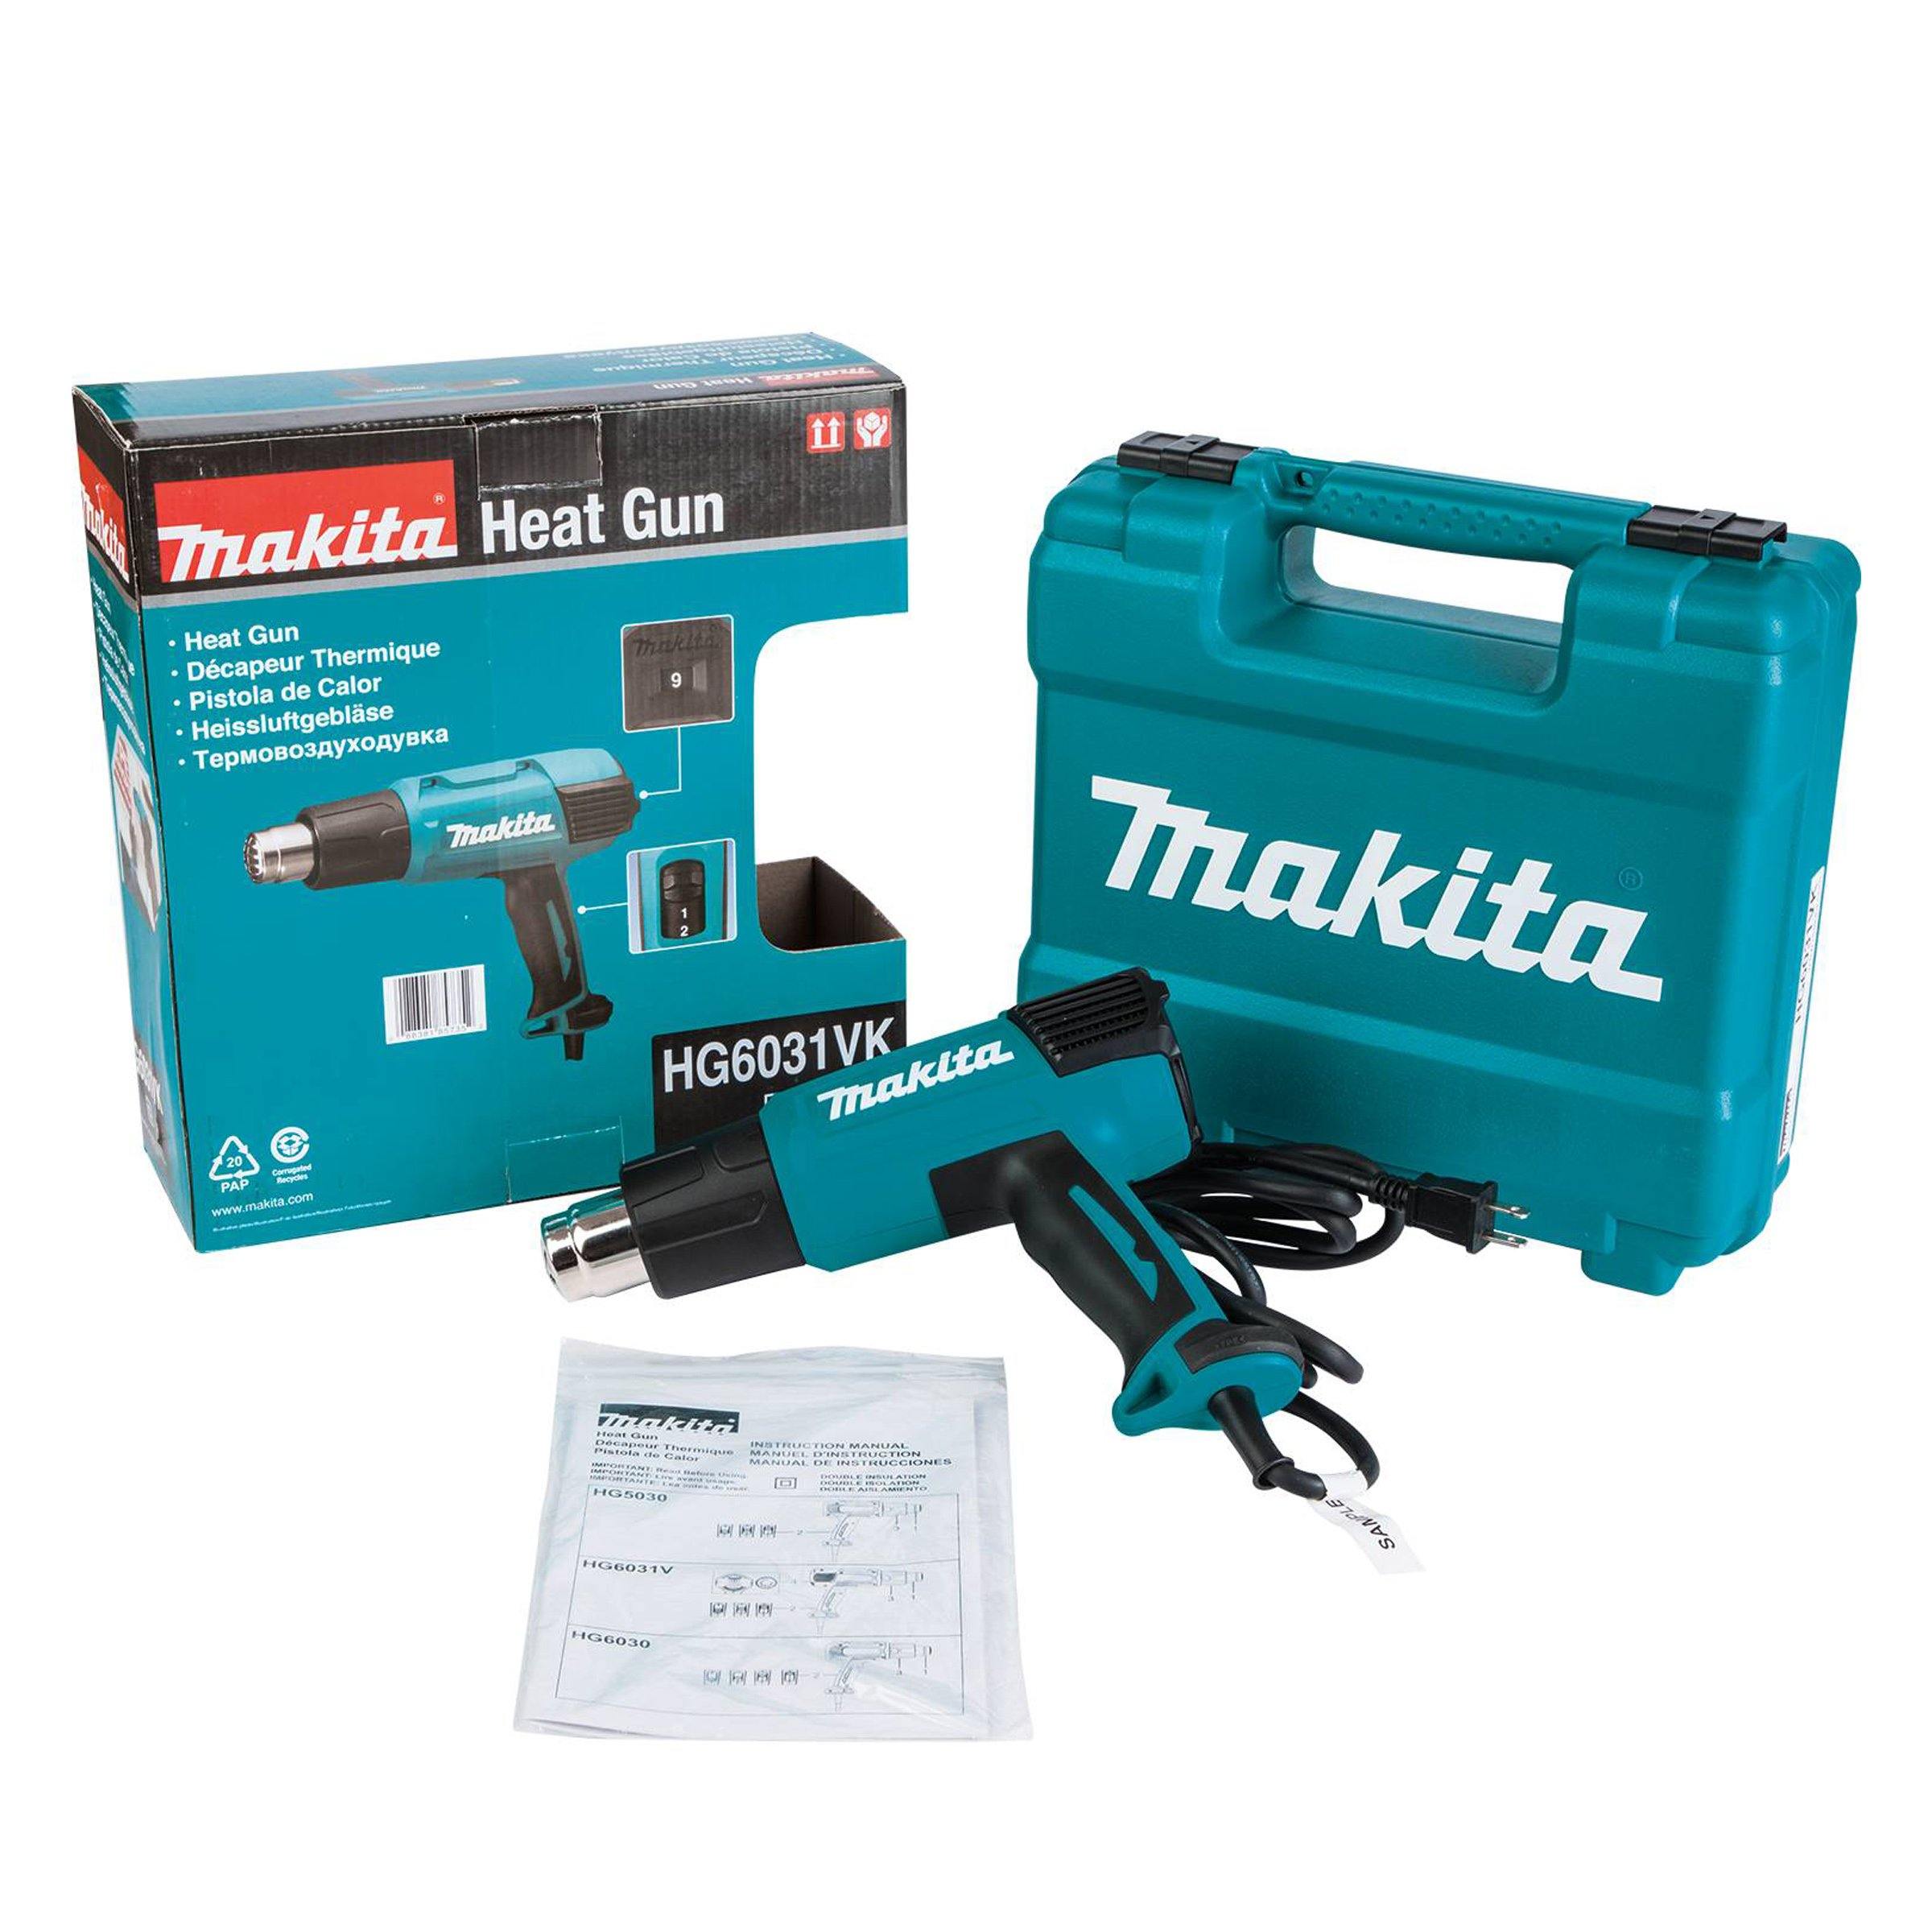 Makita Heat Gun HG6031VK Power Tool Services